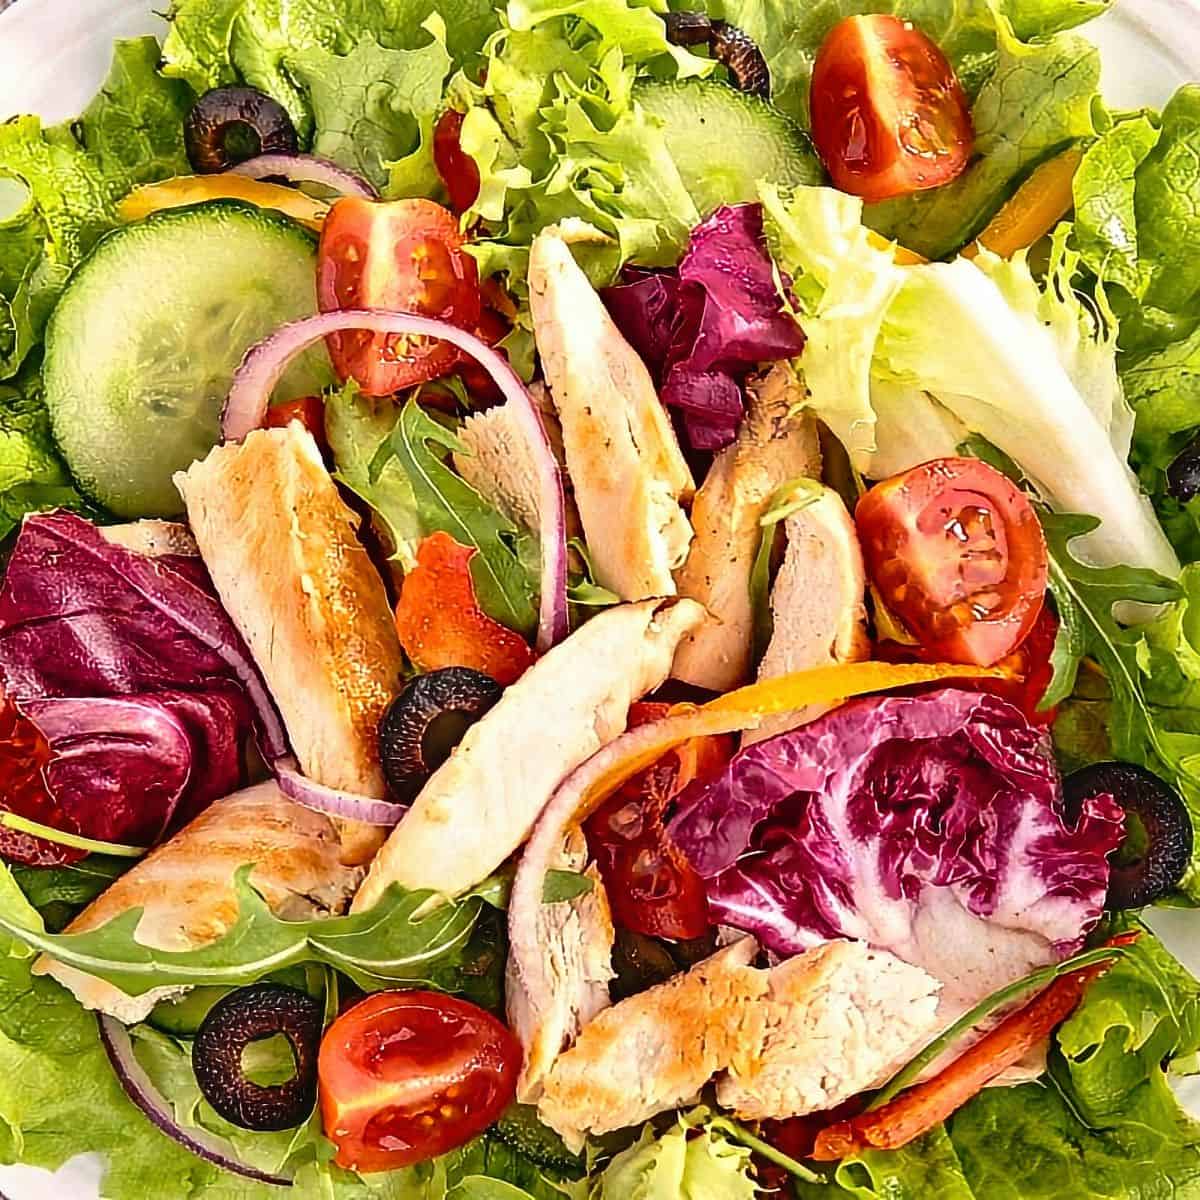 1. The Perfect Spanish Summer Chicken Salad - Spanish recipe for chicken